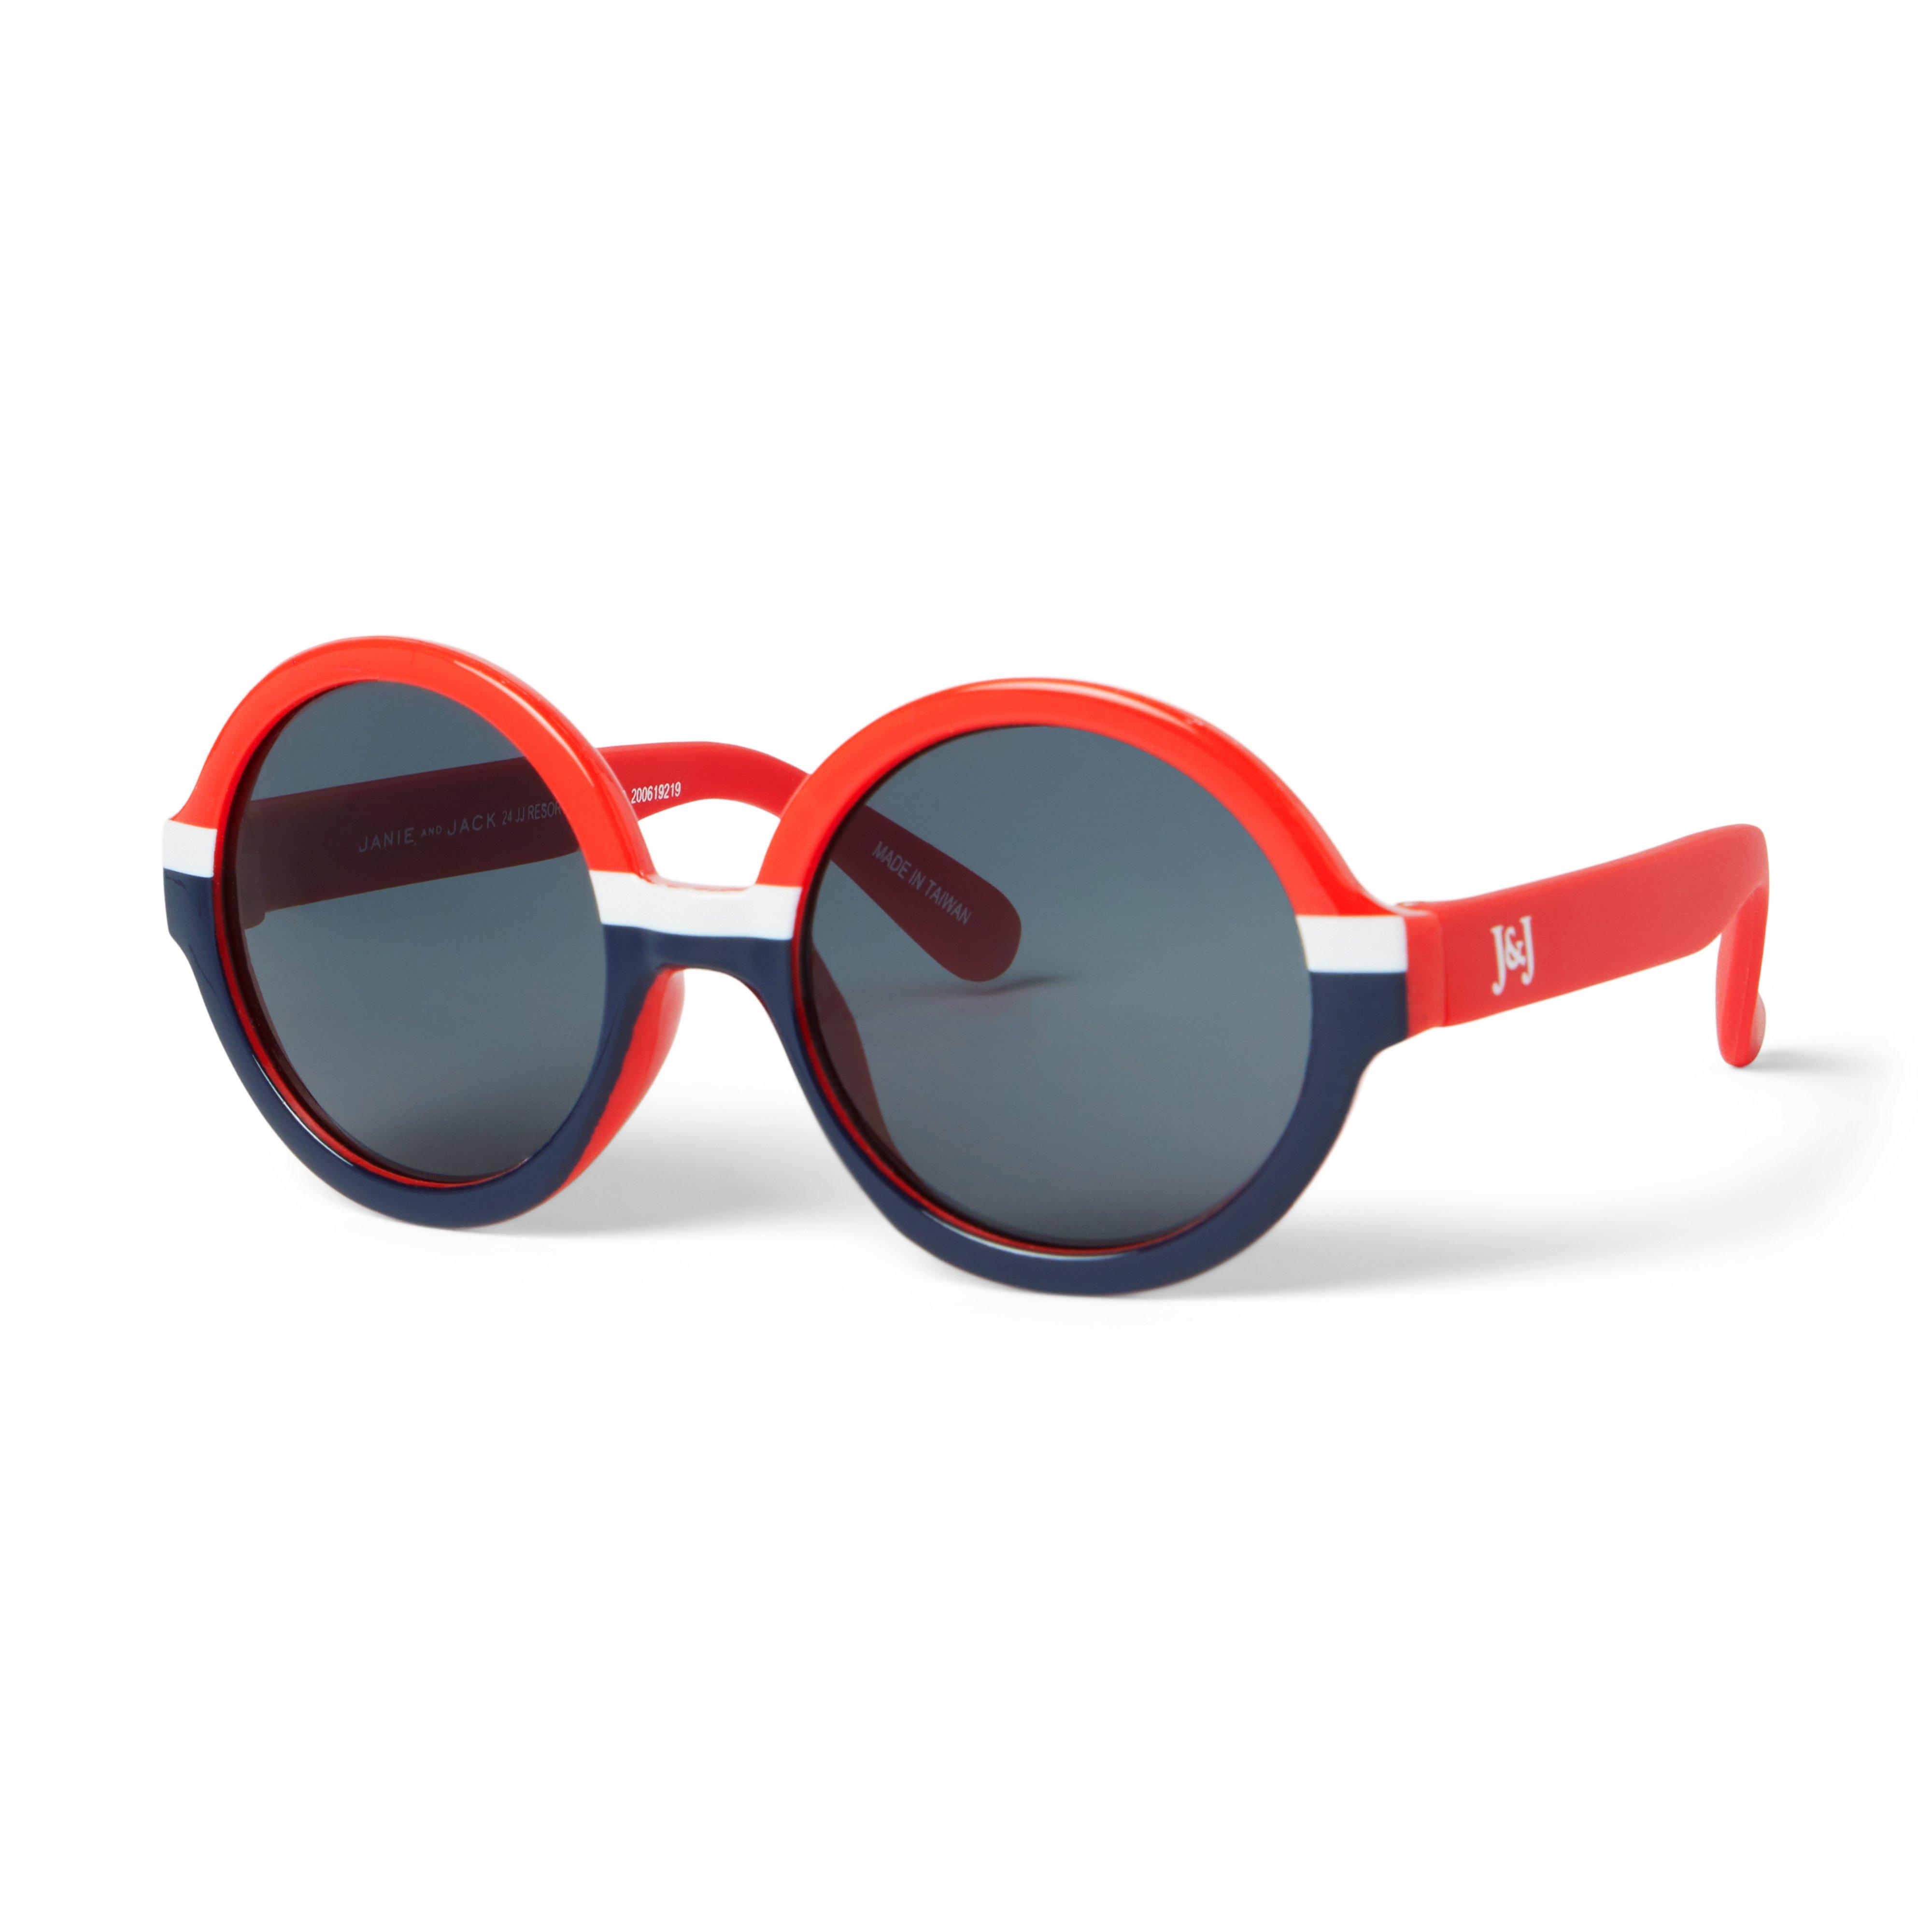 Colorblocked Round Sunglasses